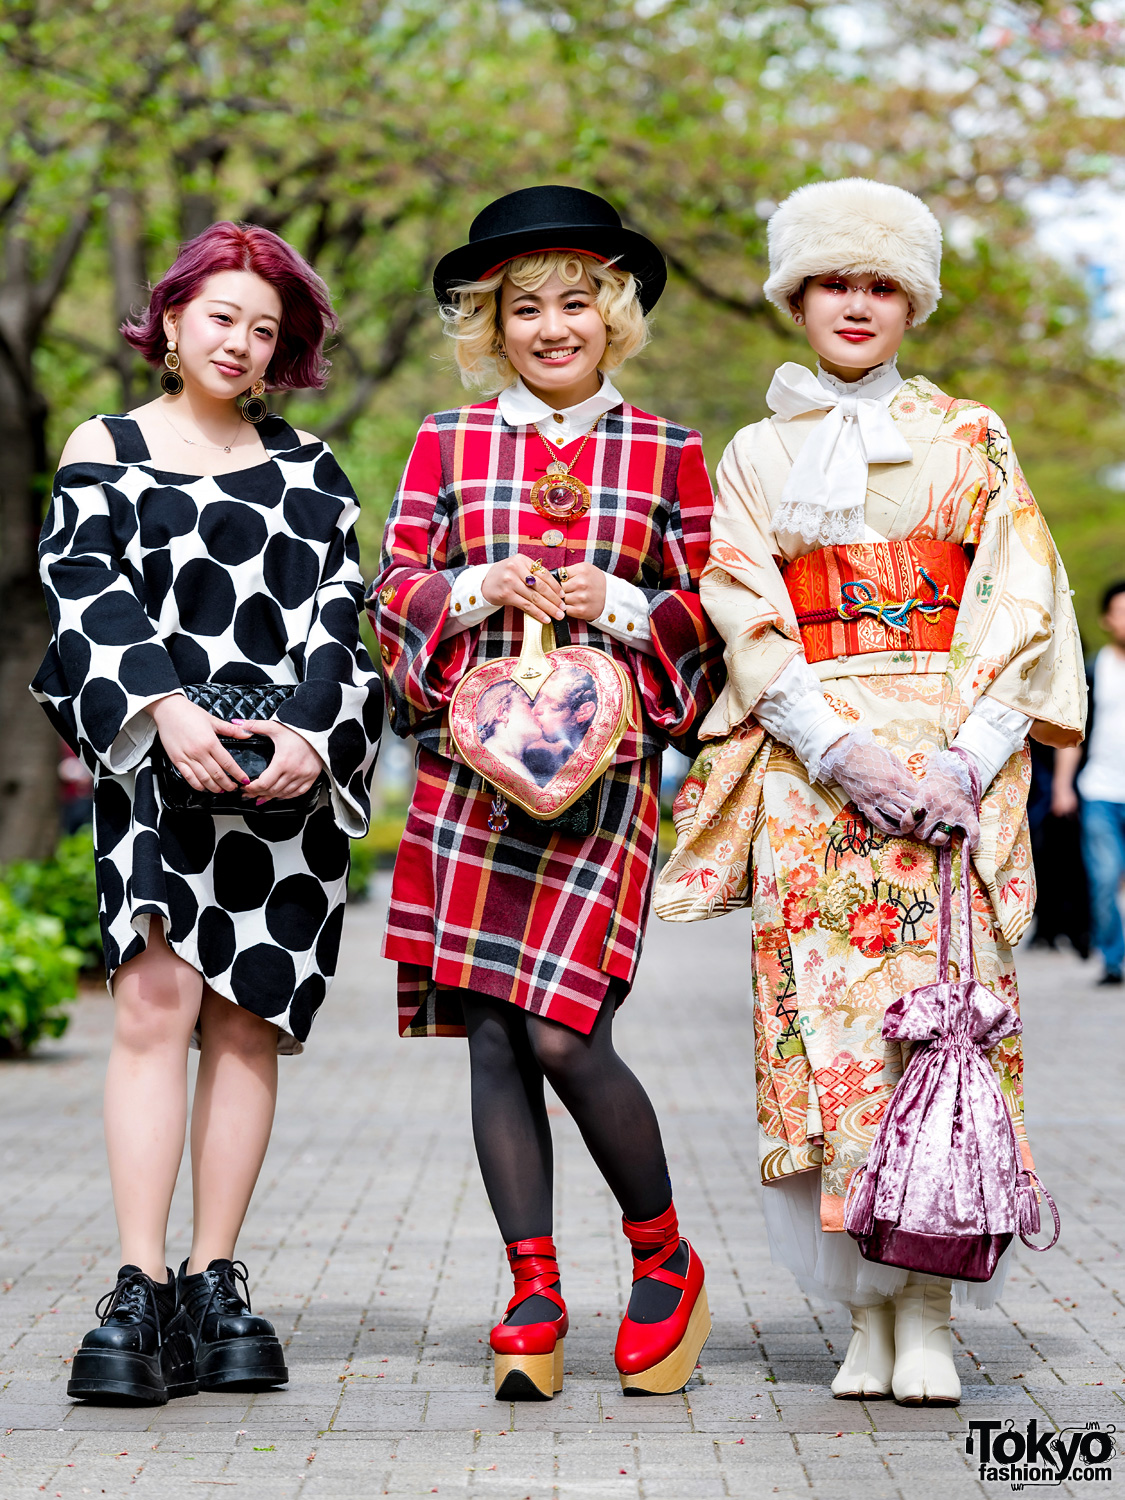 Tokyo Fashion on Twitter: Harajuku girl in kimono w/ Vivienne